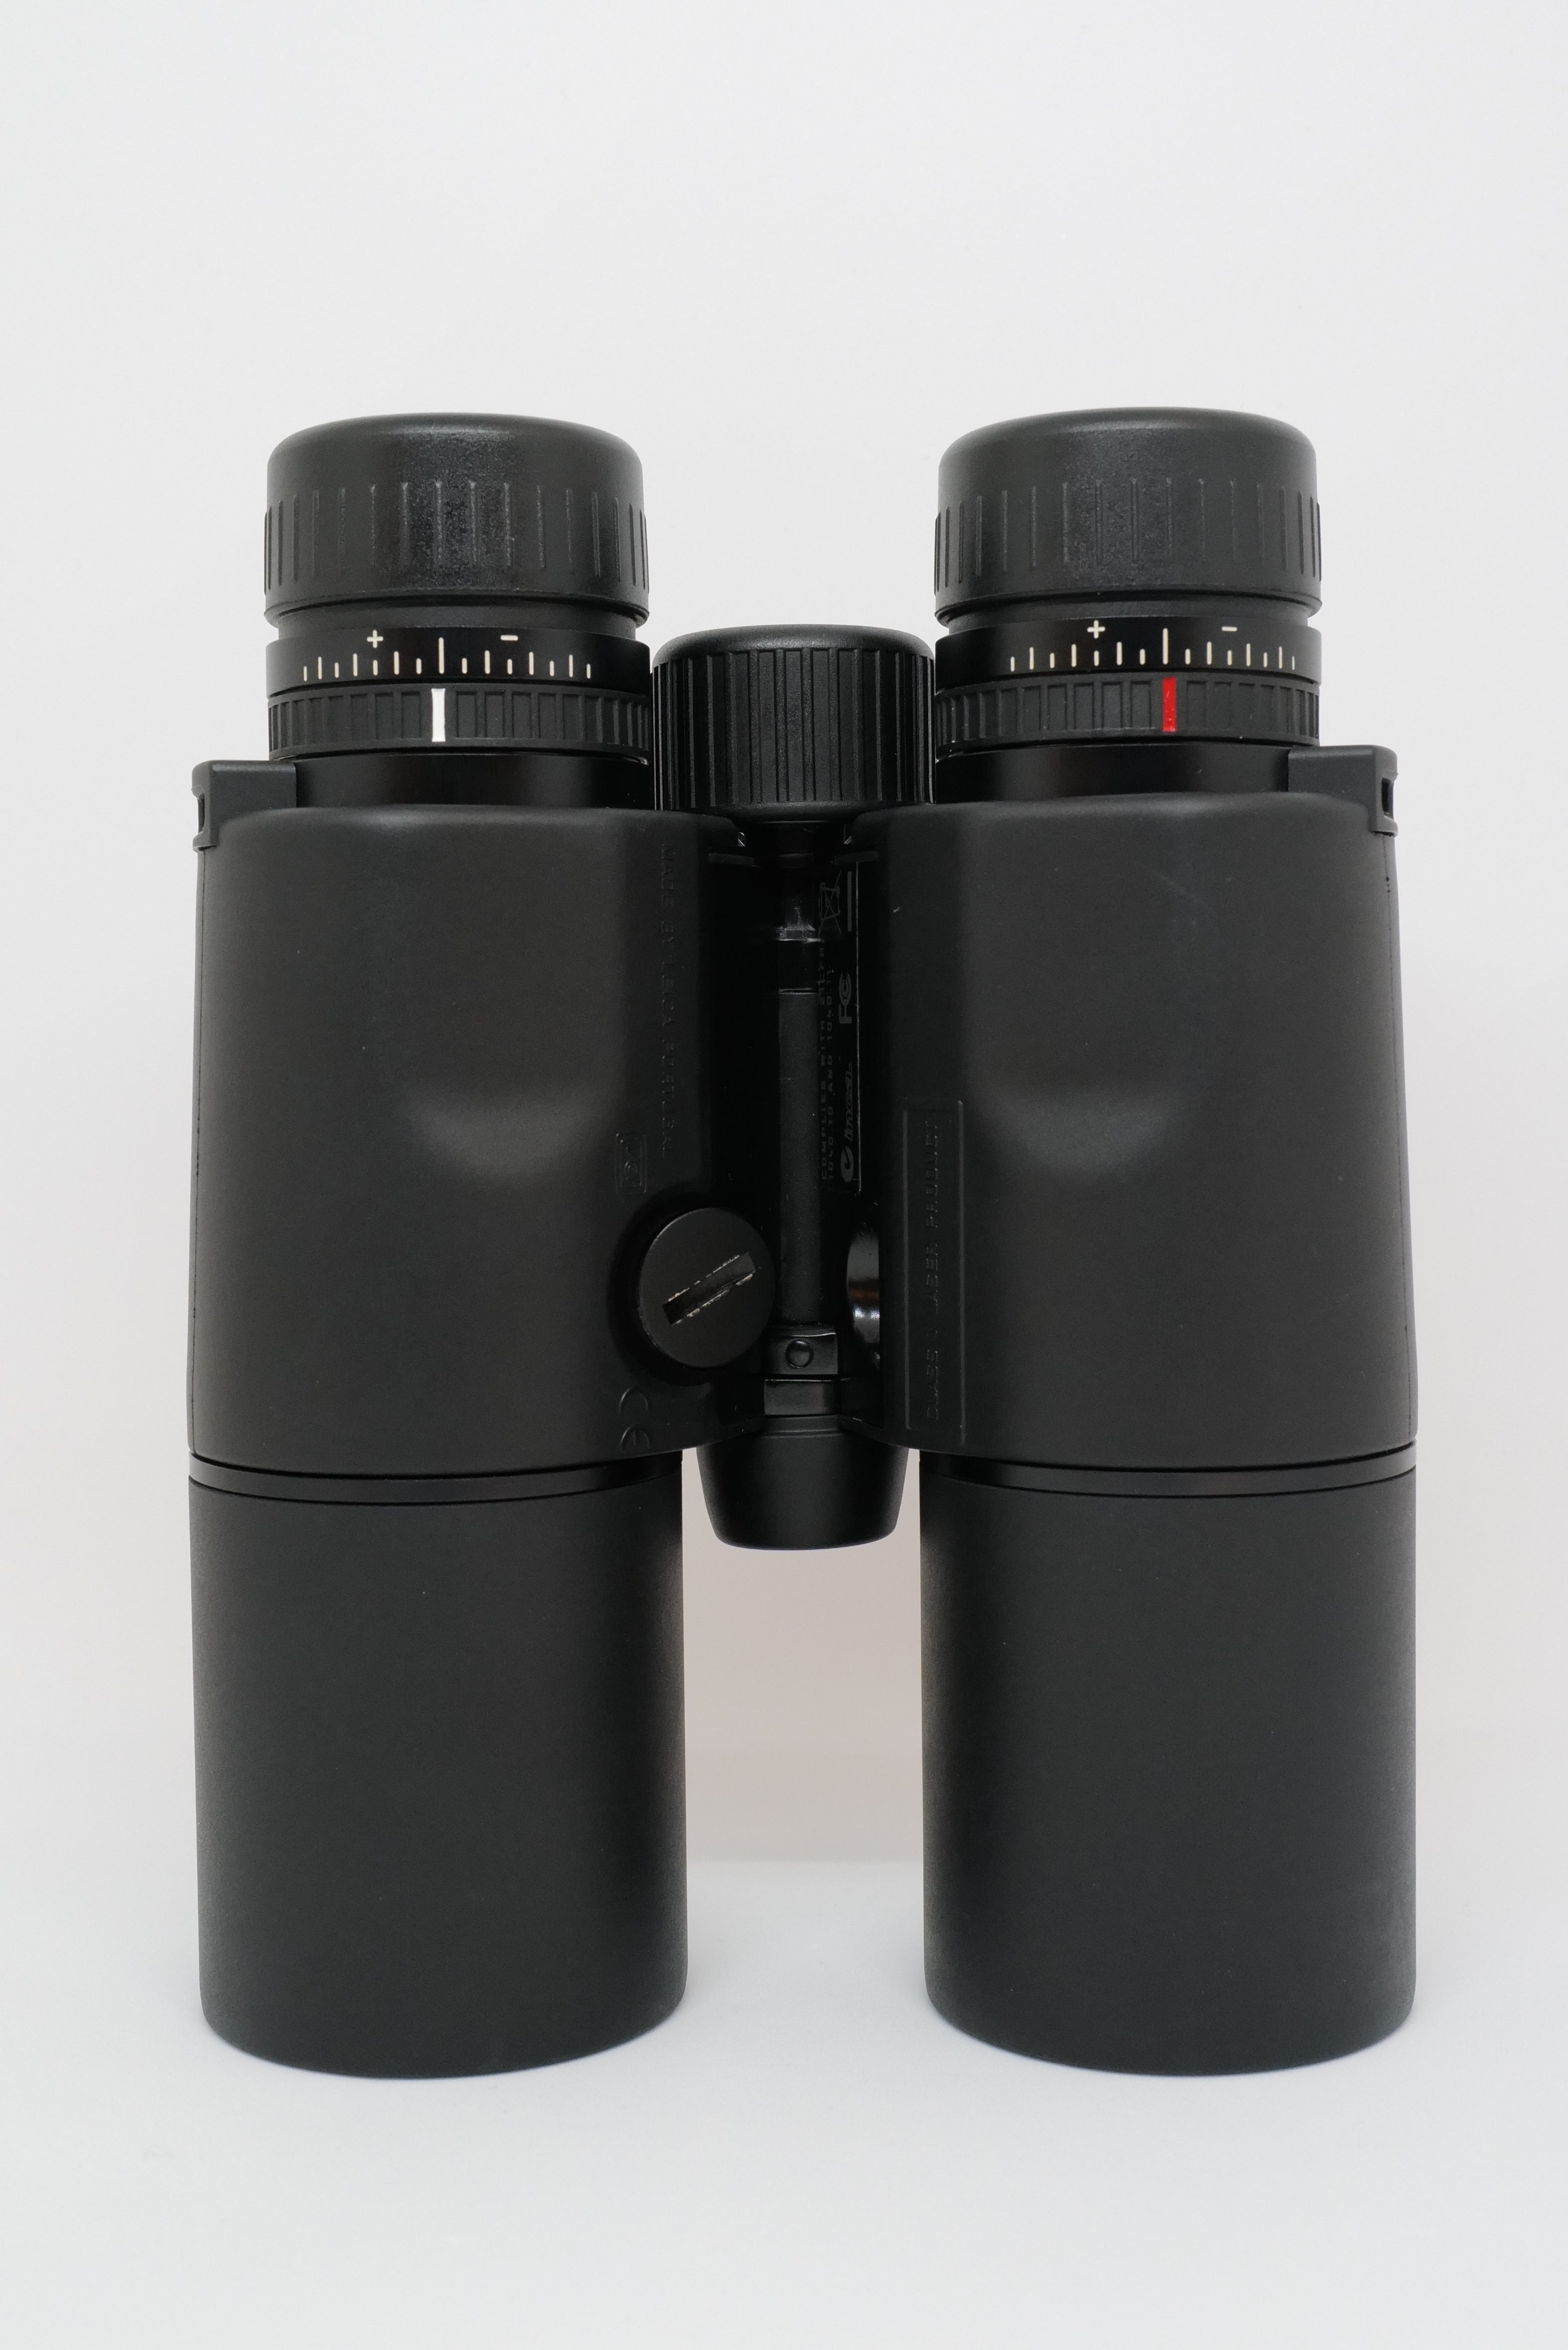 Leica Geovid 8 x 42 HD-M Binoculars (Display/ Demo Unit)